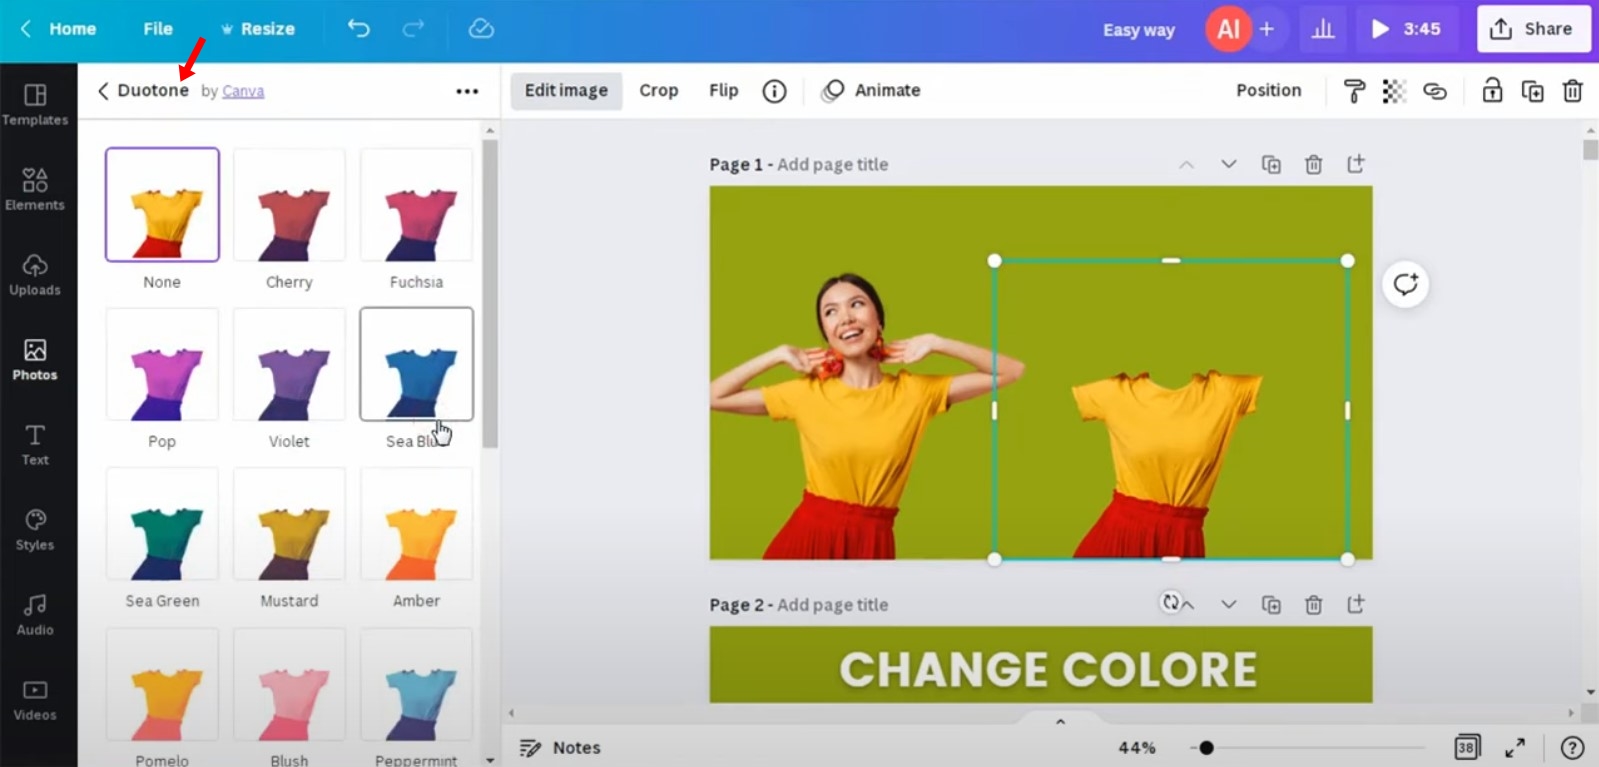 pilih menu Duotone untuk memilih warna baju 